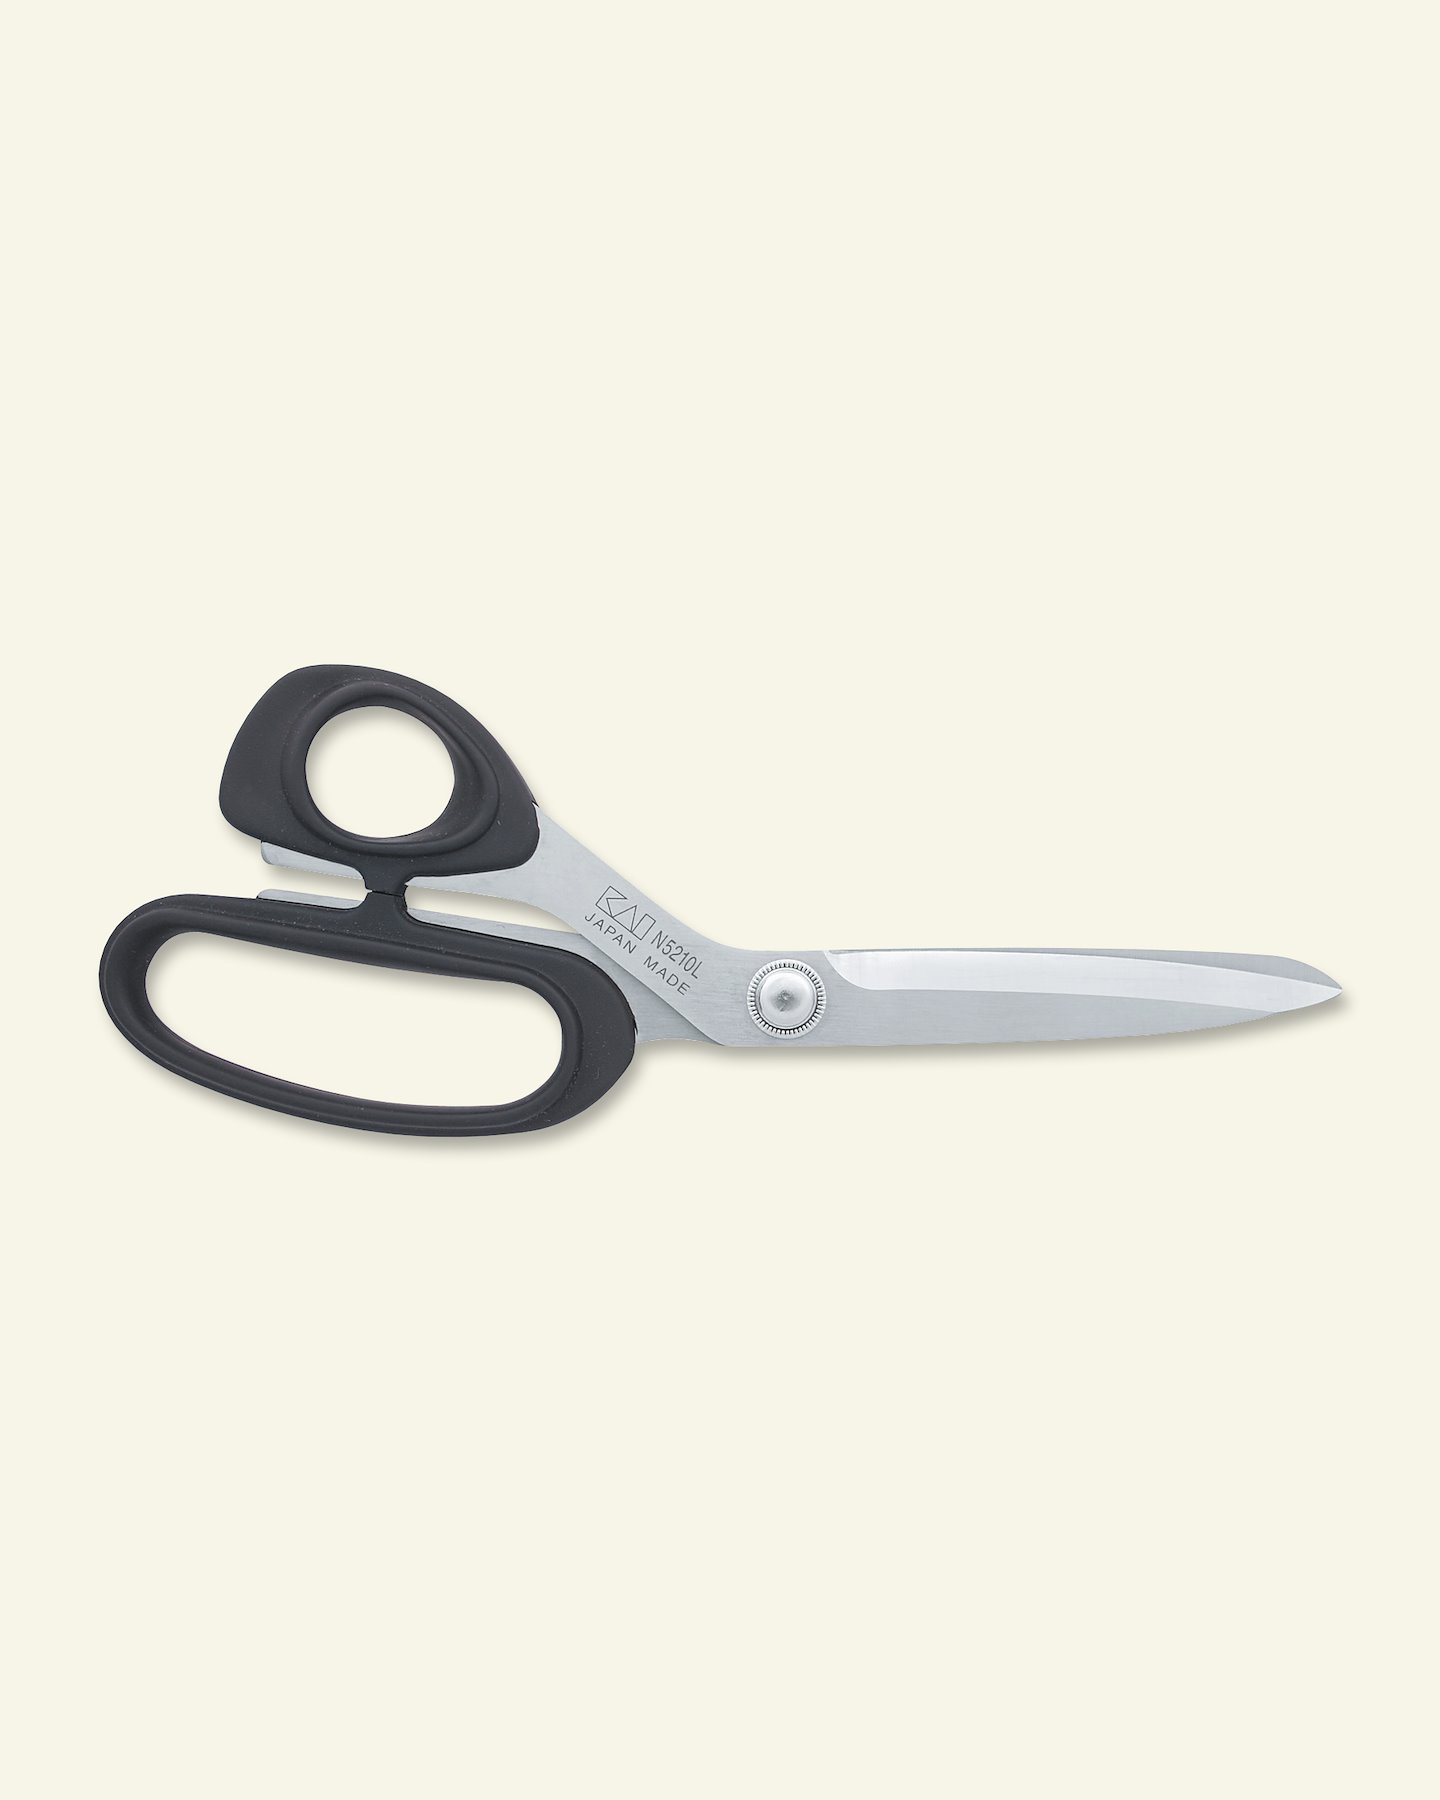 KAI universal scissor left hand 21cm 39301_pack